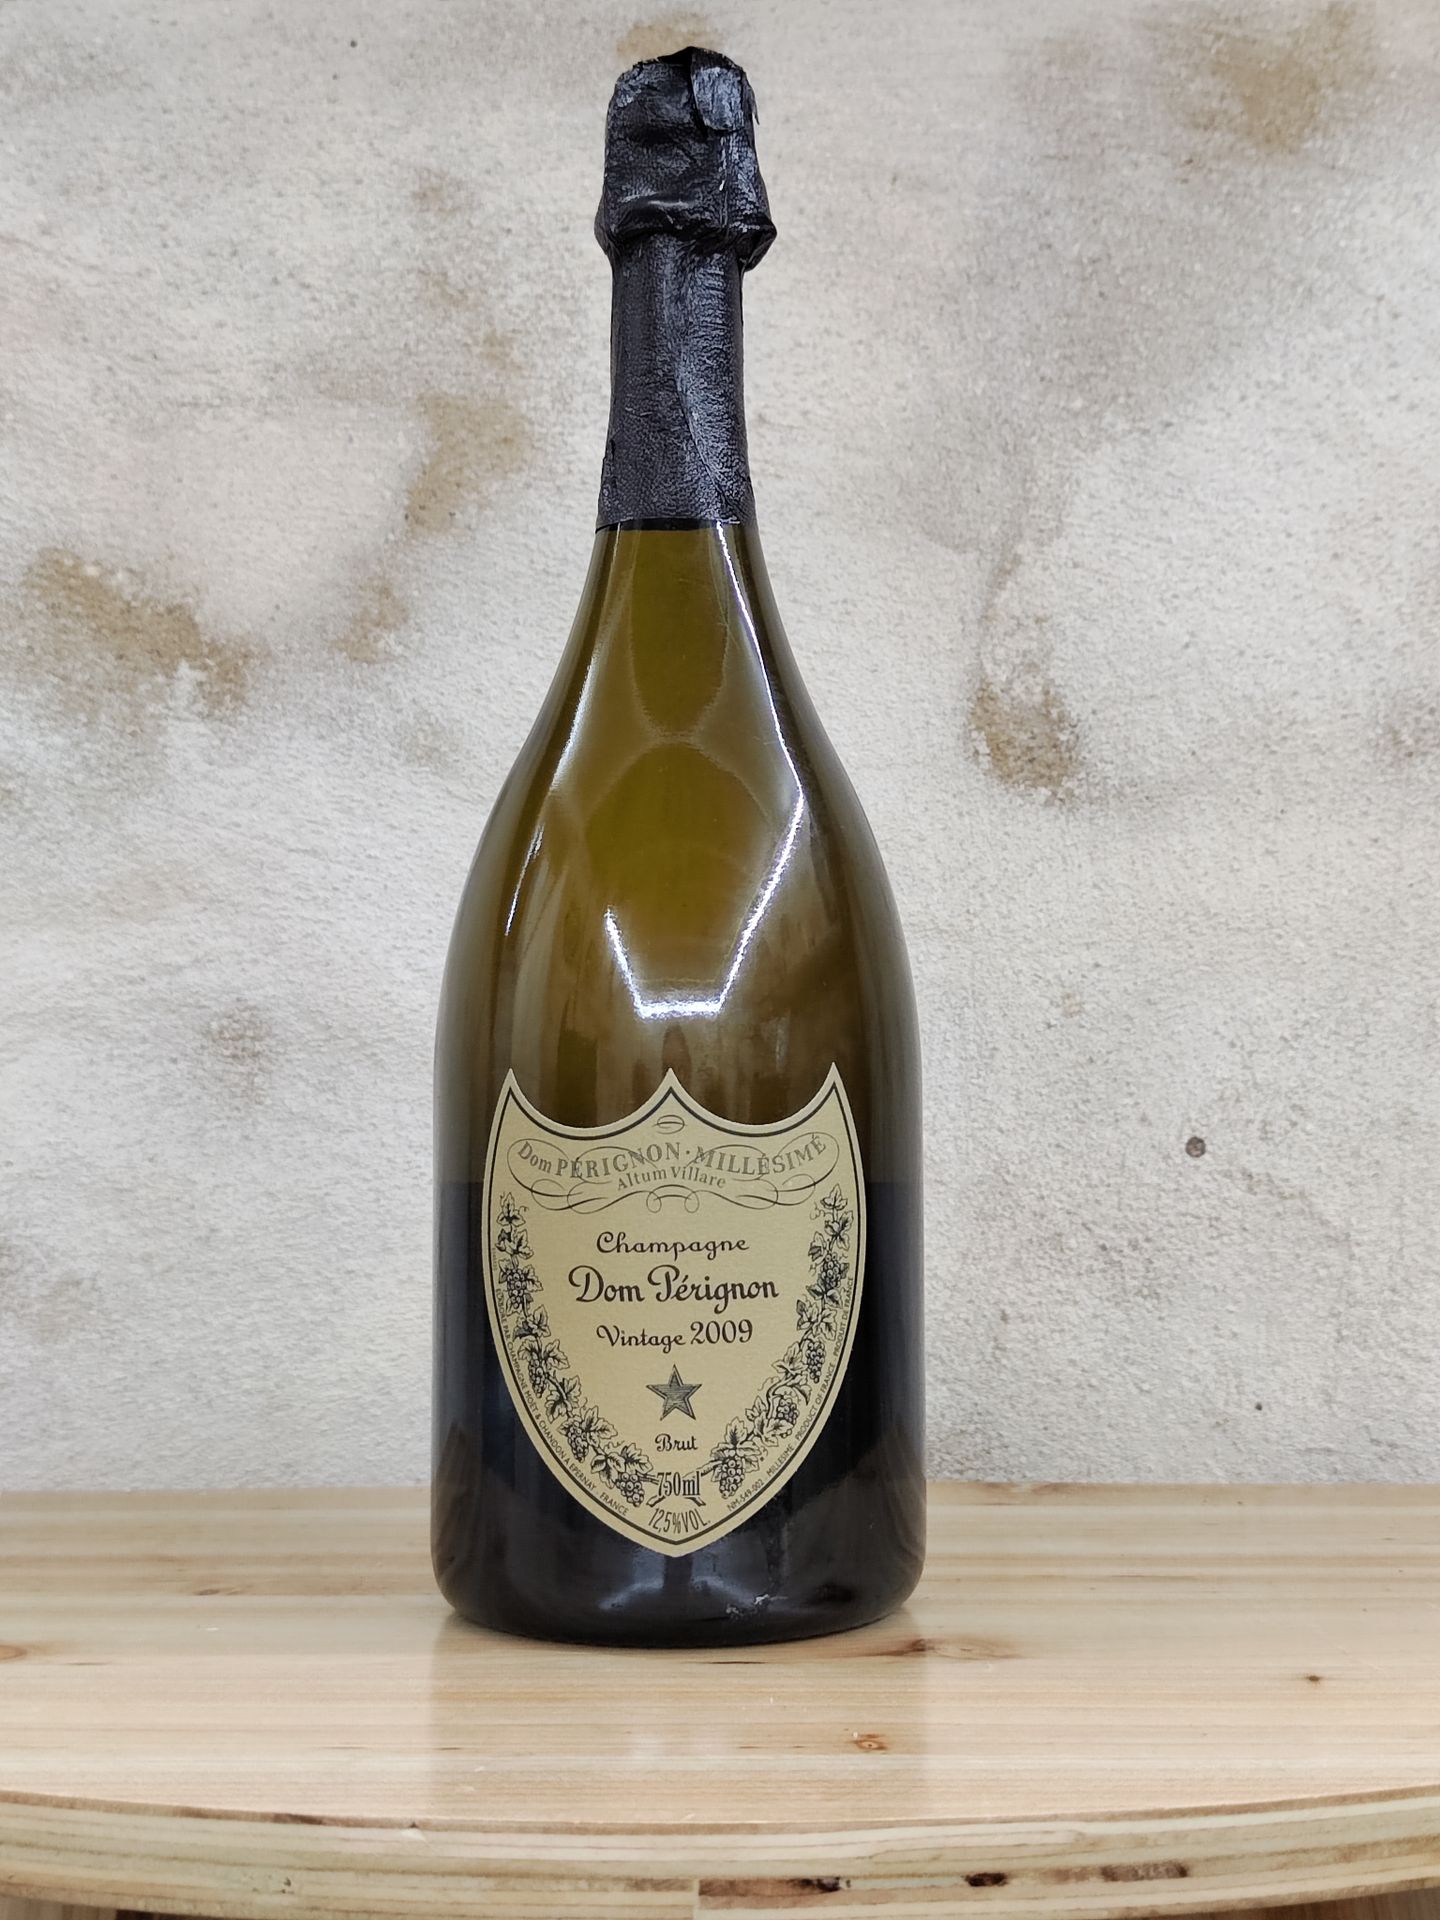 Null 1瓶2009年份DOM PERIGNON香槟。
盒装。